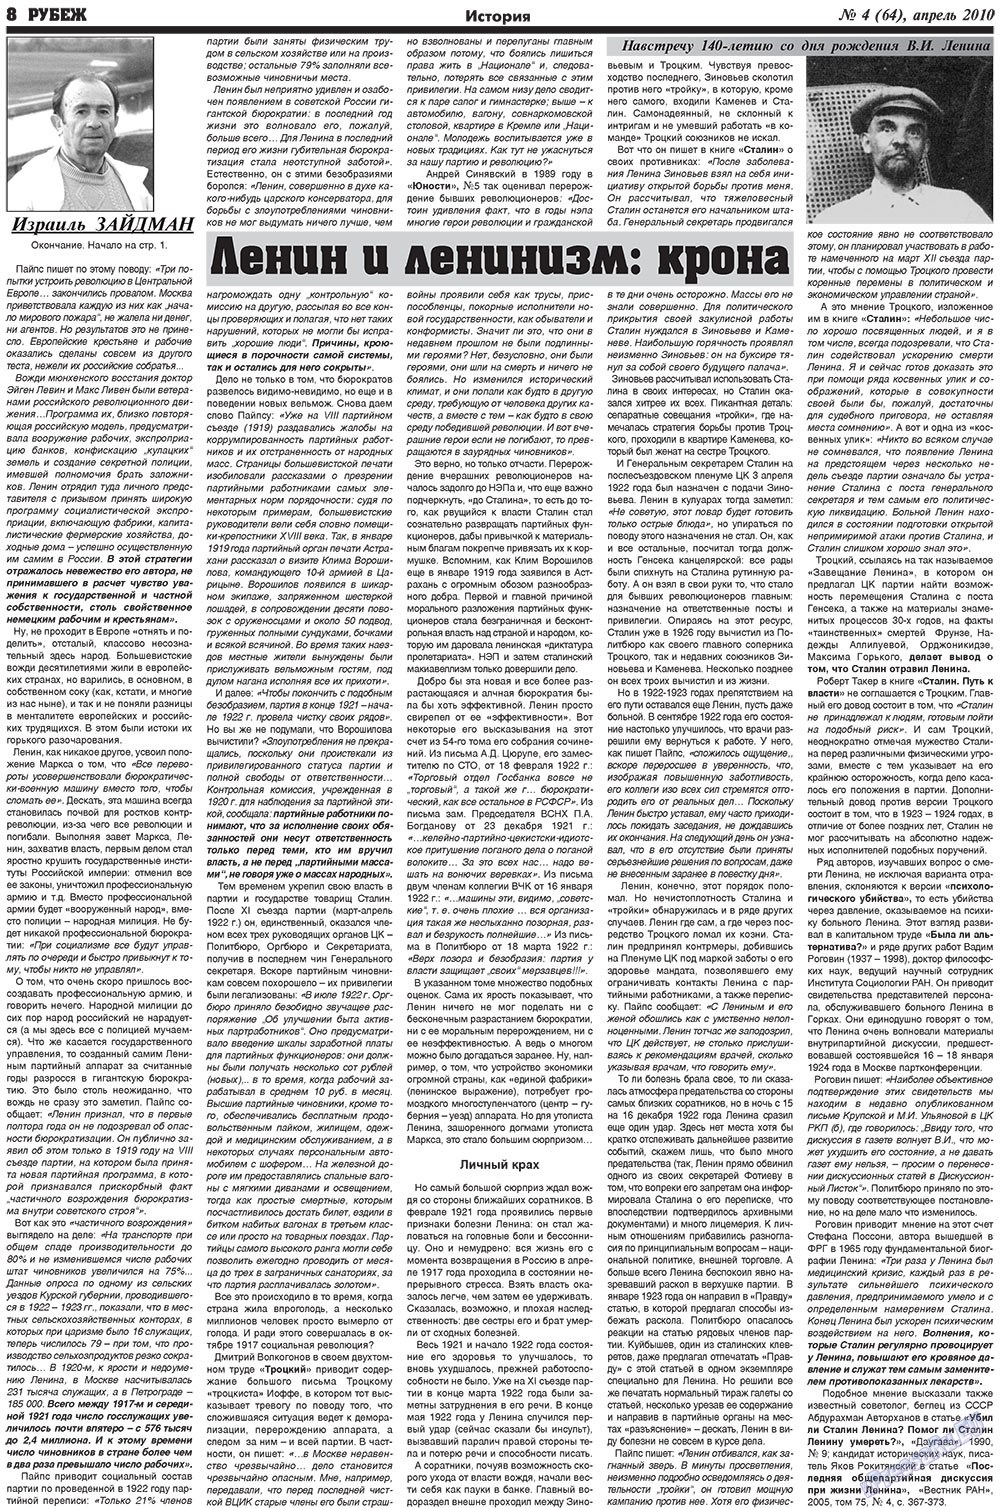 Рубеж, газета. 2010 №4 стр.8